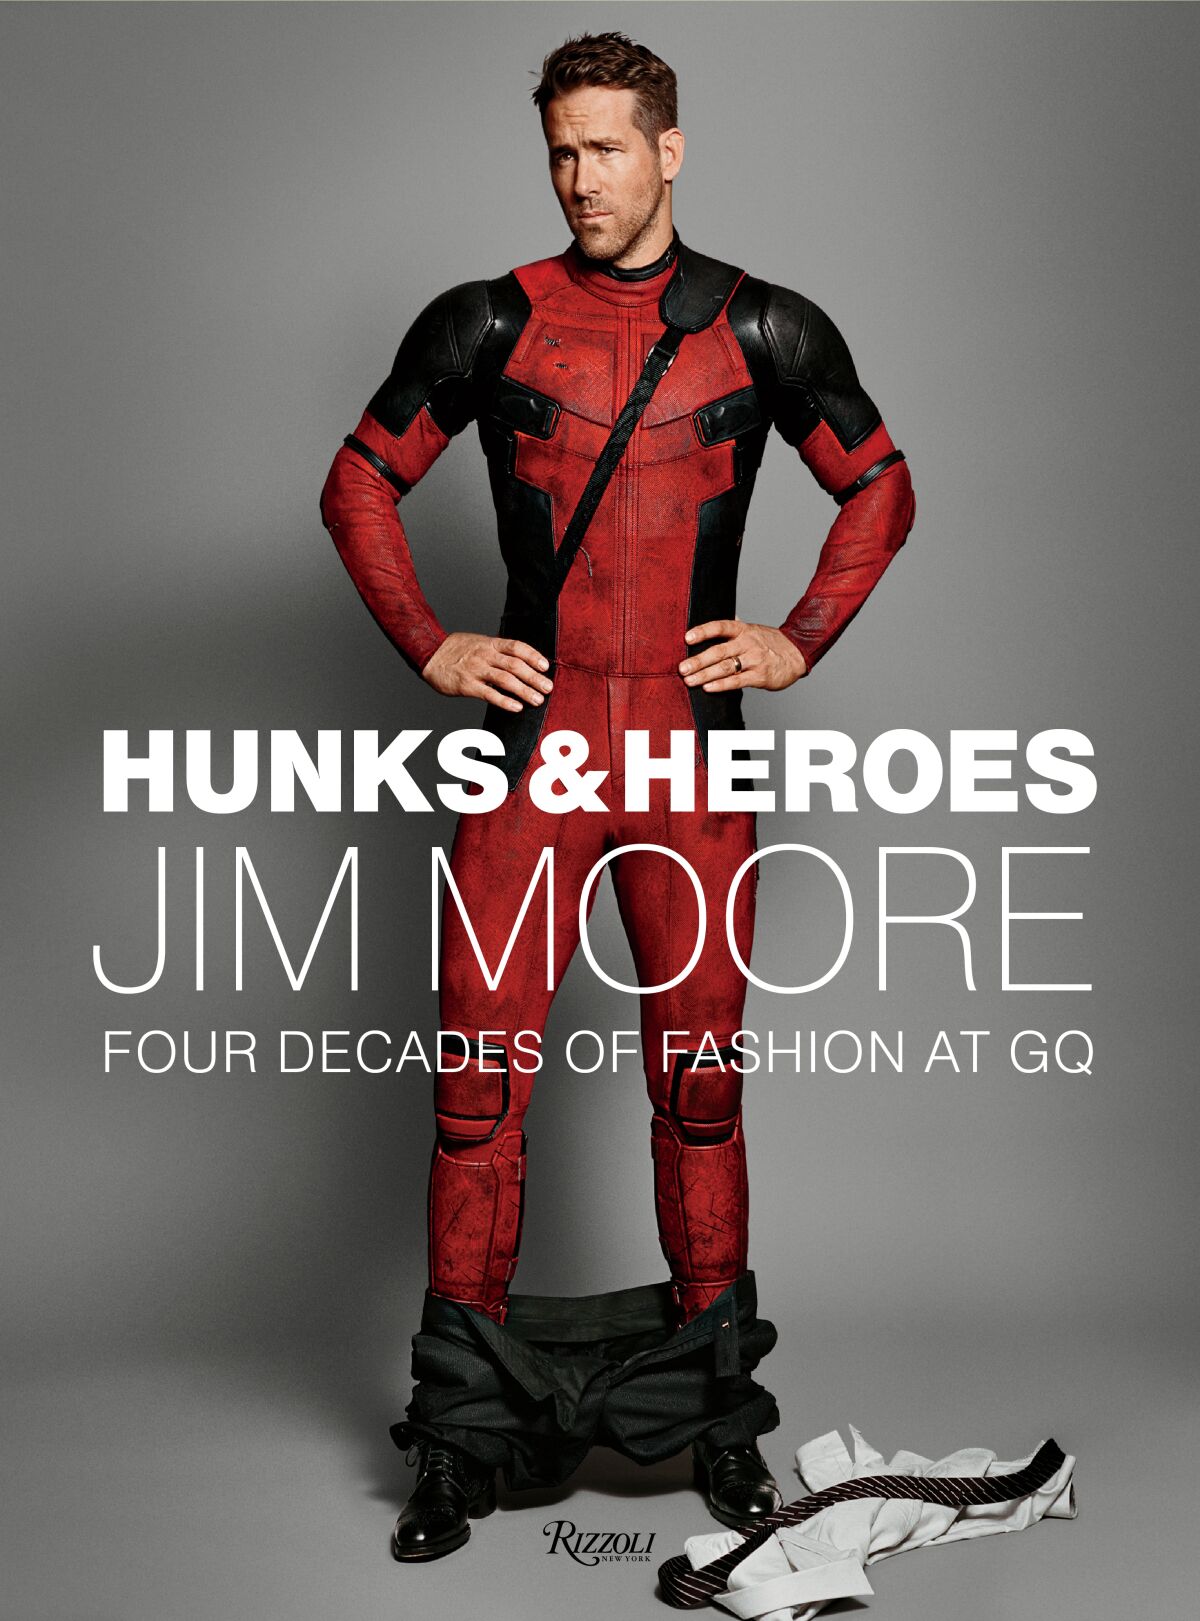 “Hunks & Heros: Jim Moore Four Decades of Fashion at GQ"